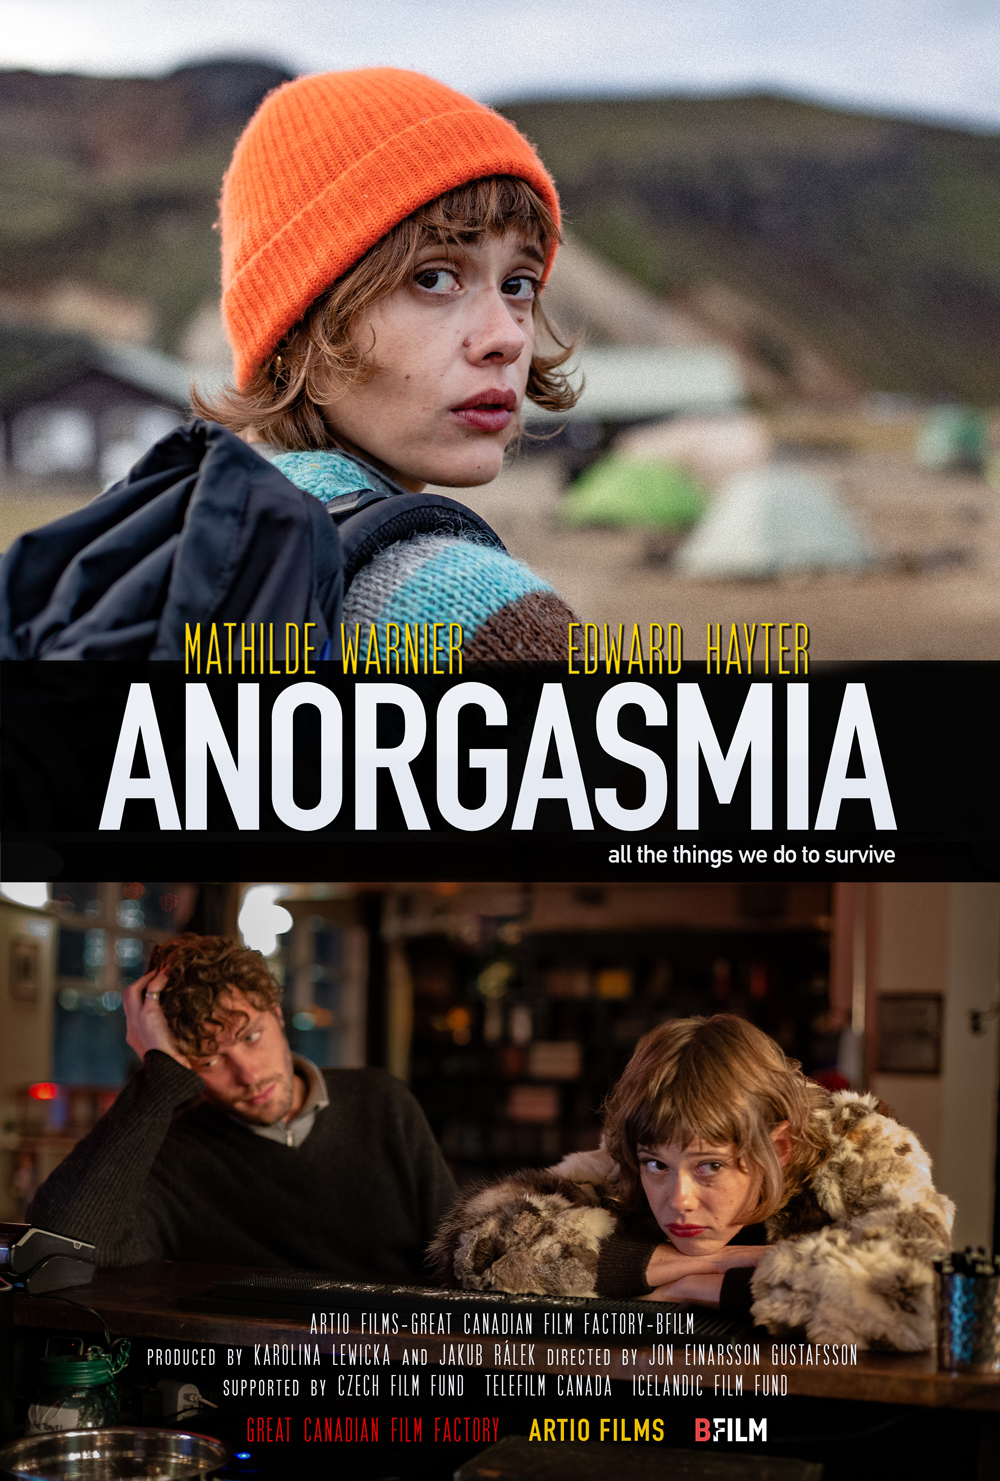 ANORGASMIA a feature film by Jon Einarsson Gustafsson